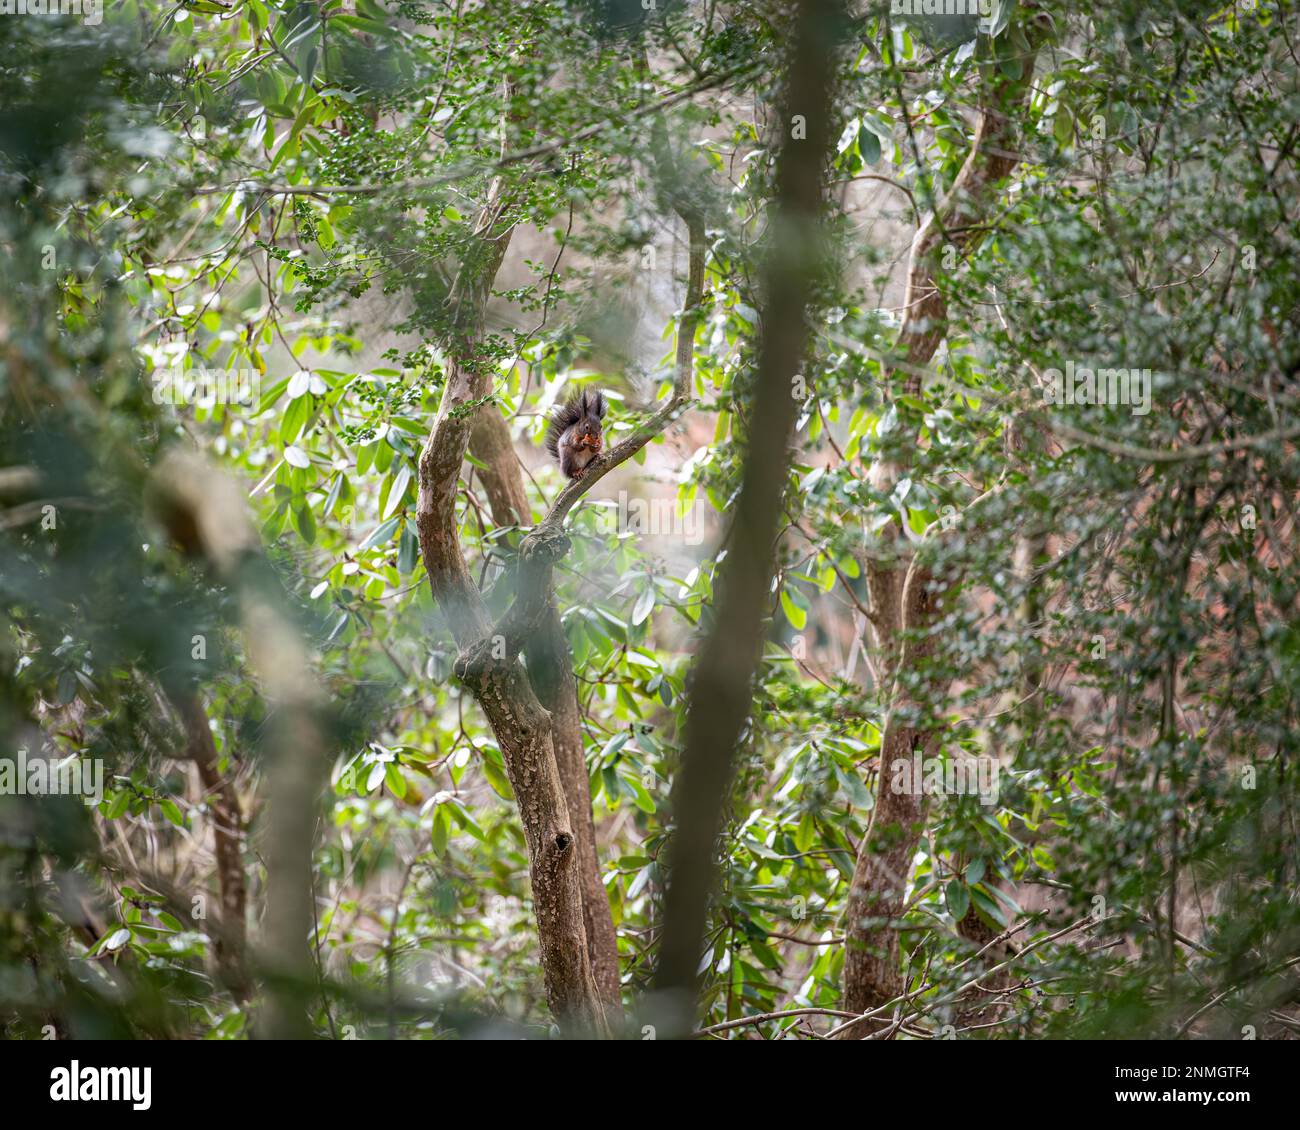 Eurasian squirrel (Sciurus), far away, sitting among trees and leaves, eating Stock Photo